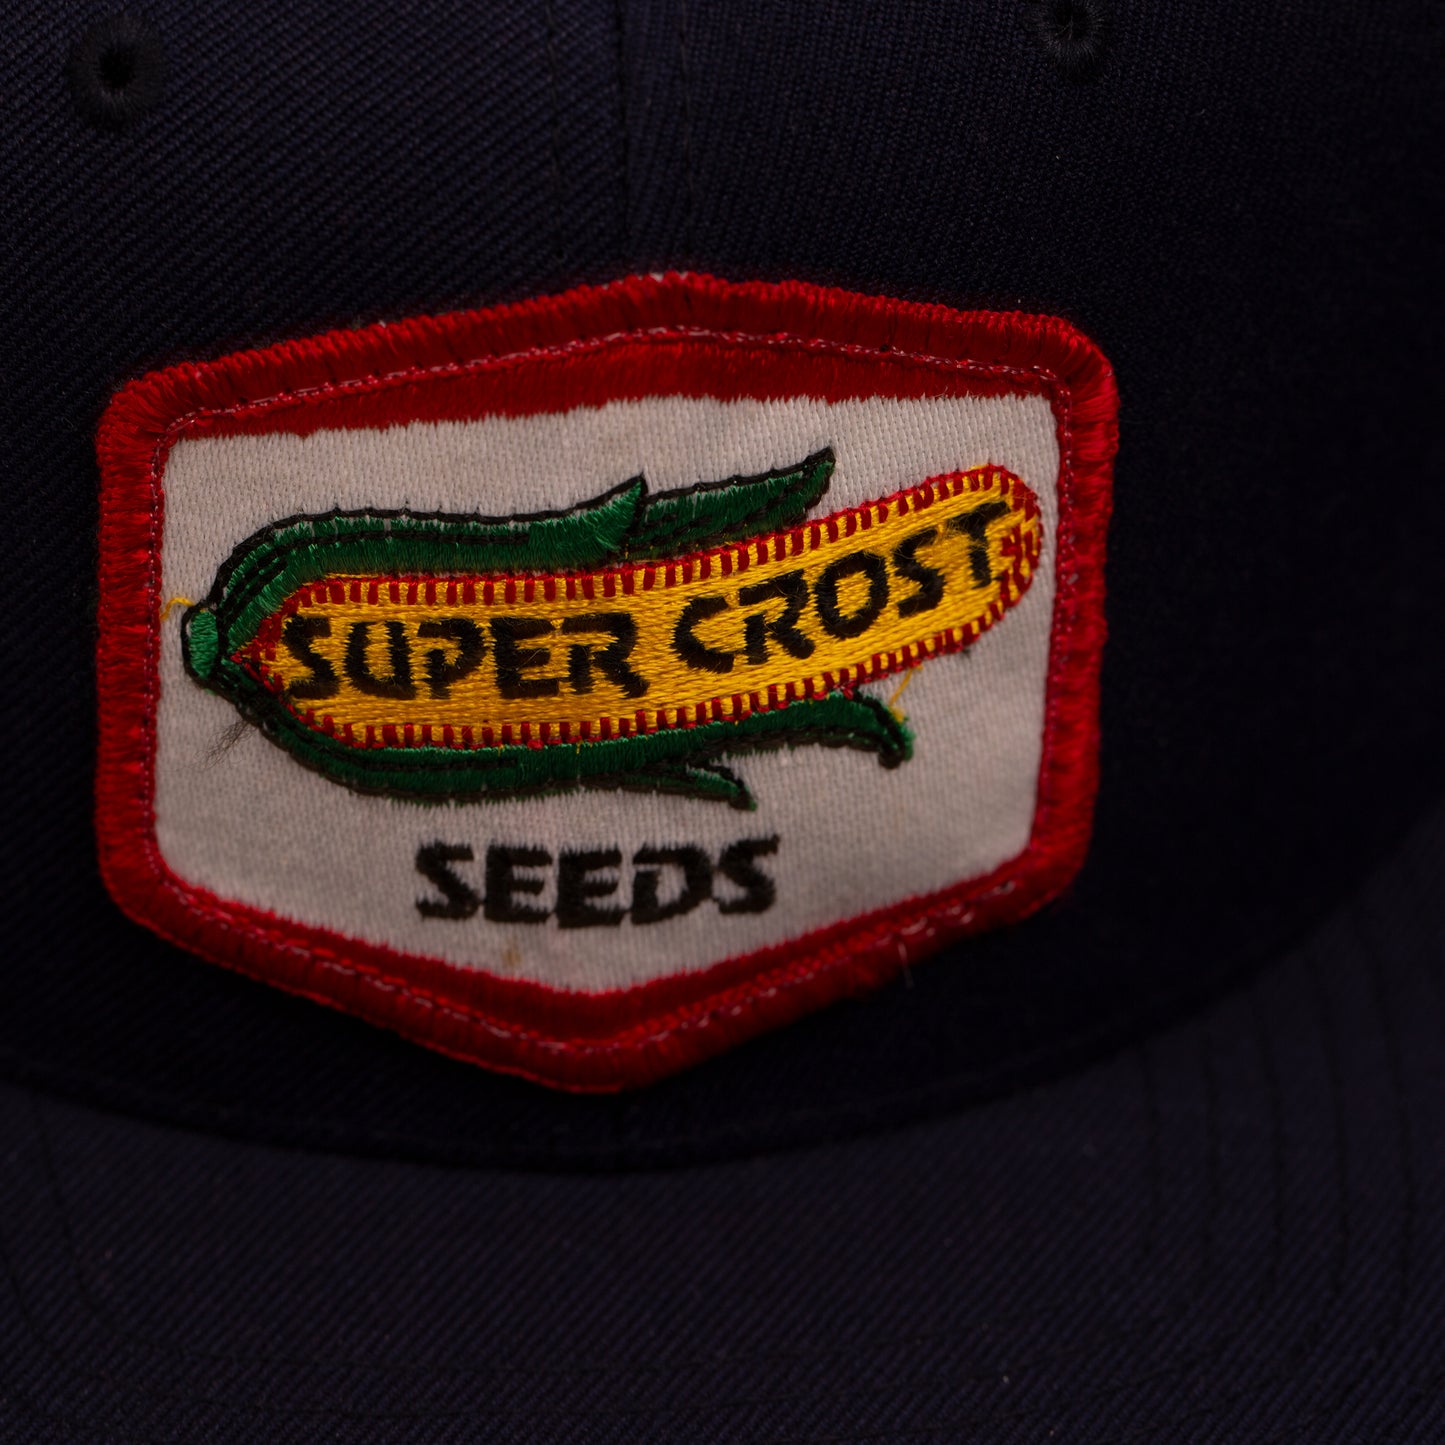 Super Crost Seeds